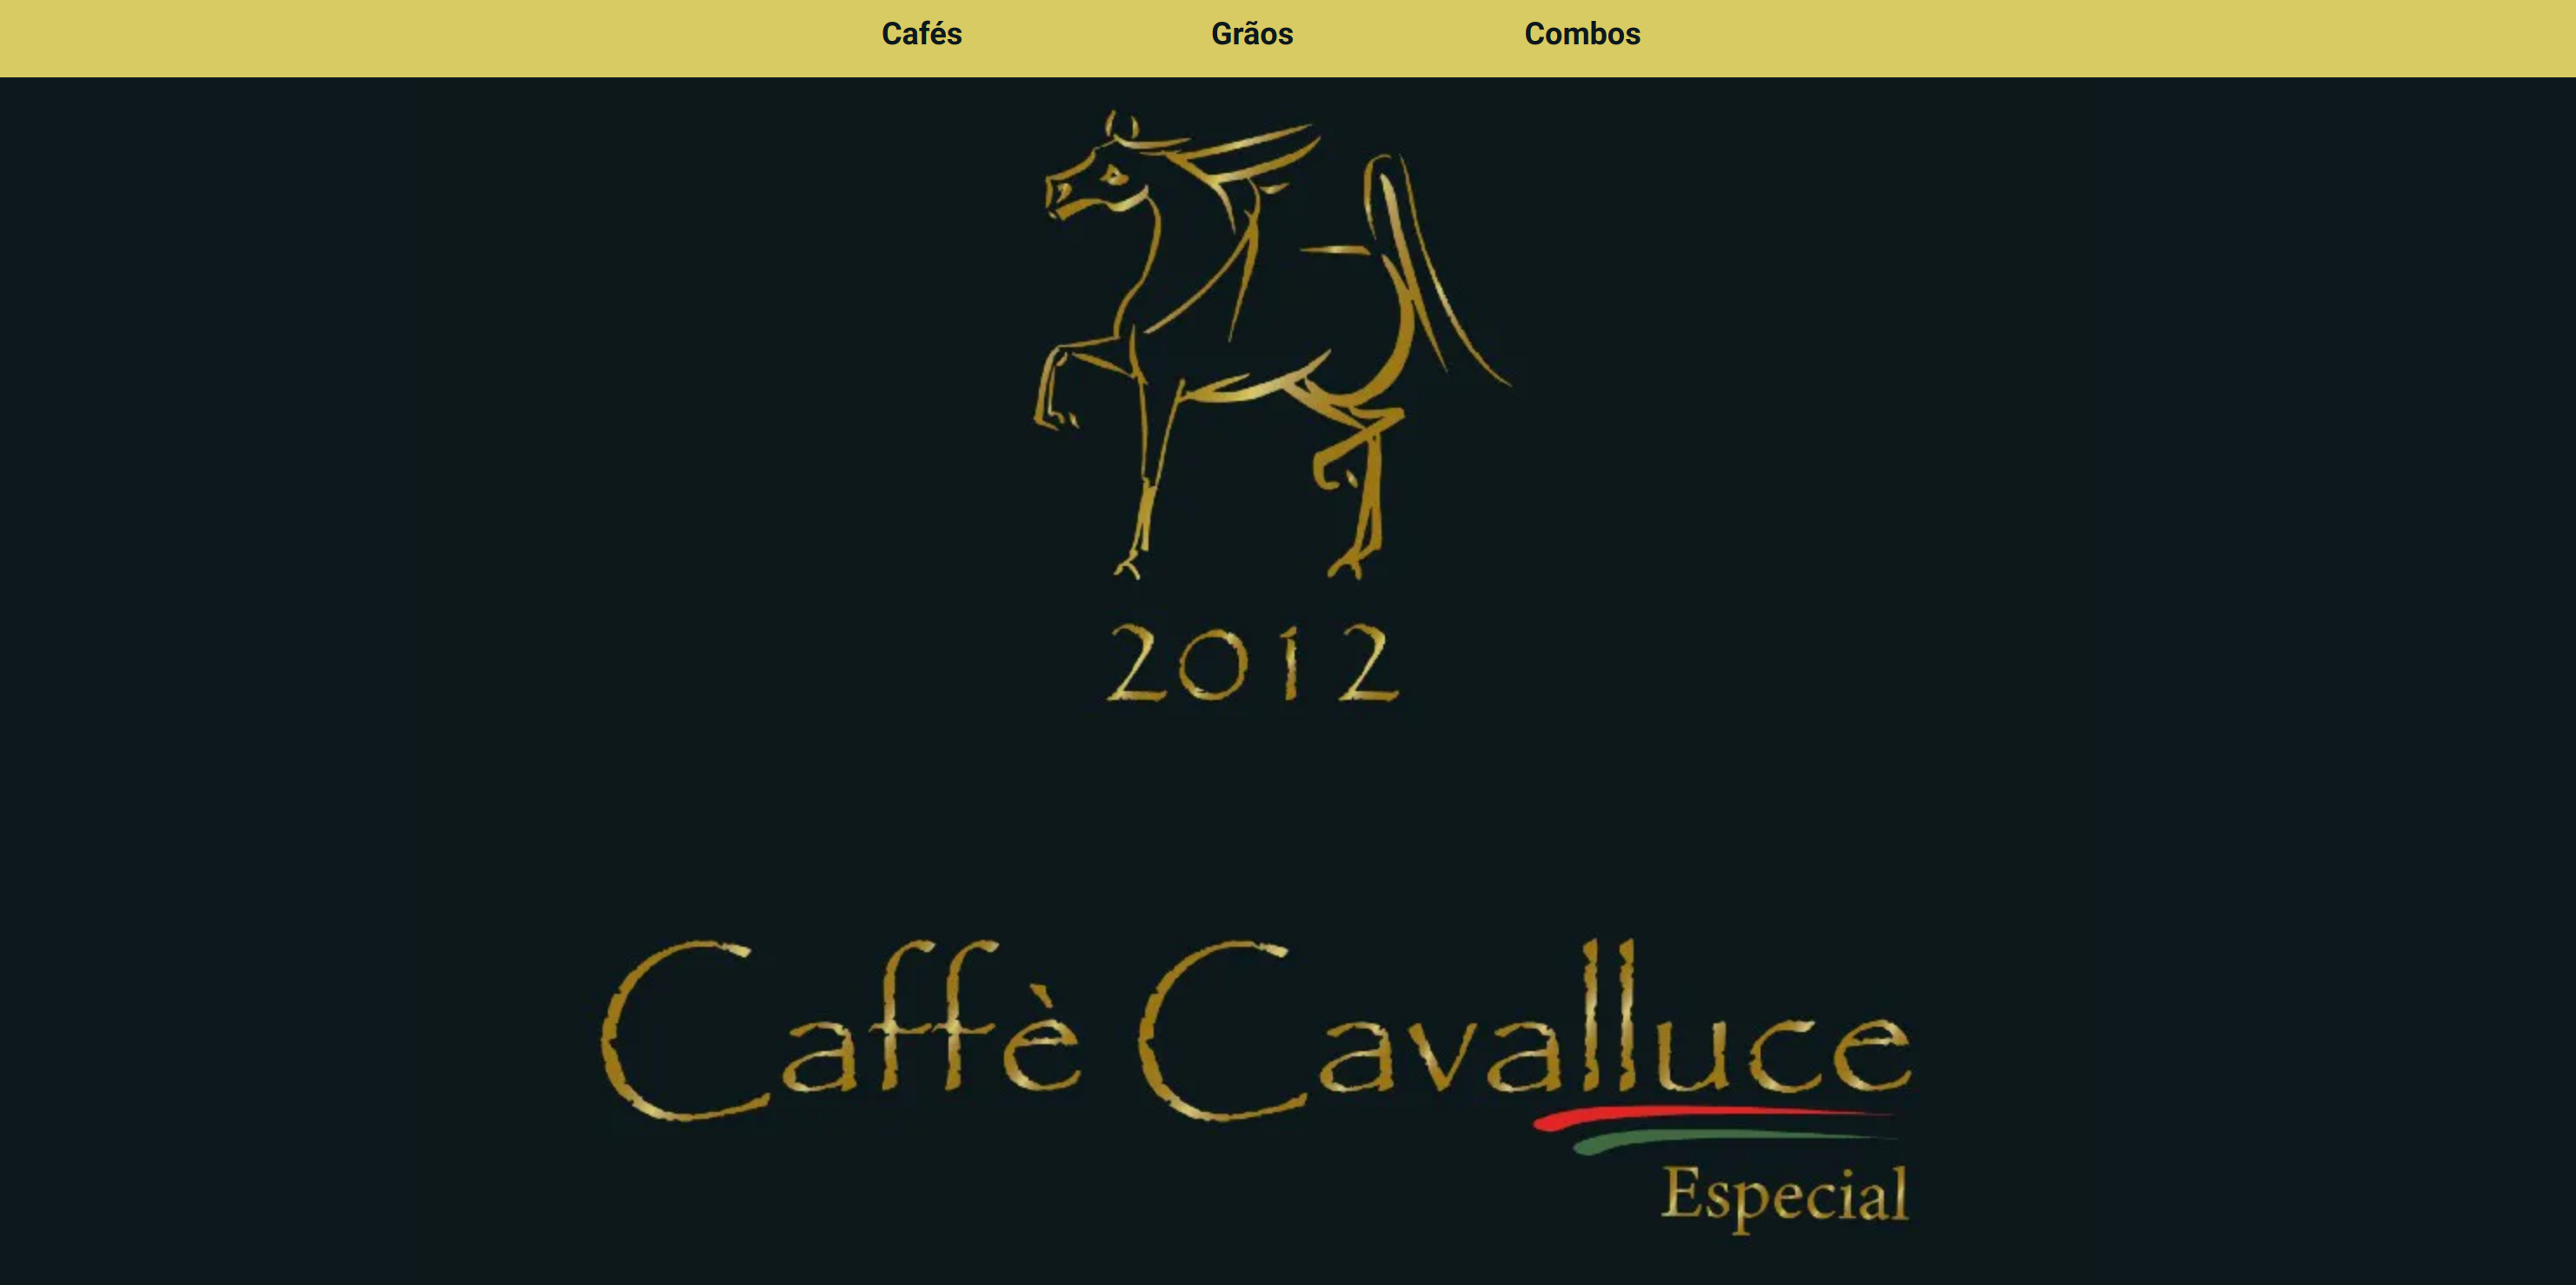 Cavalluce project